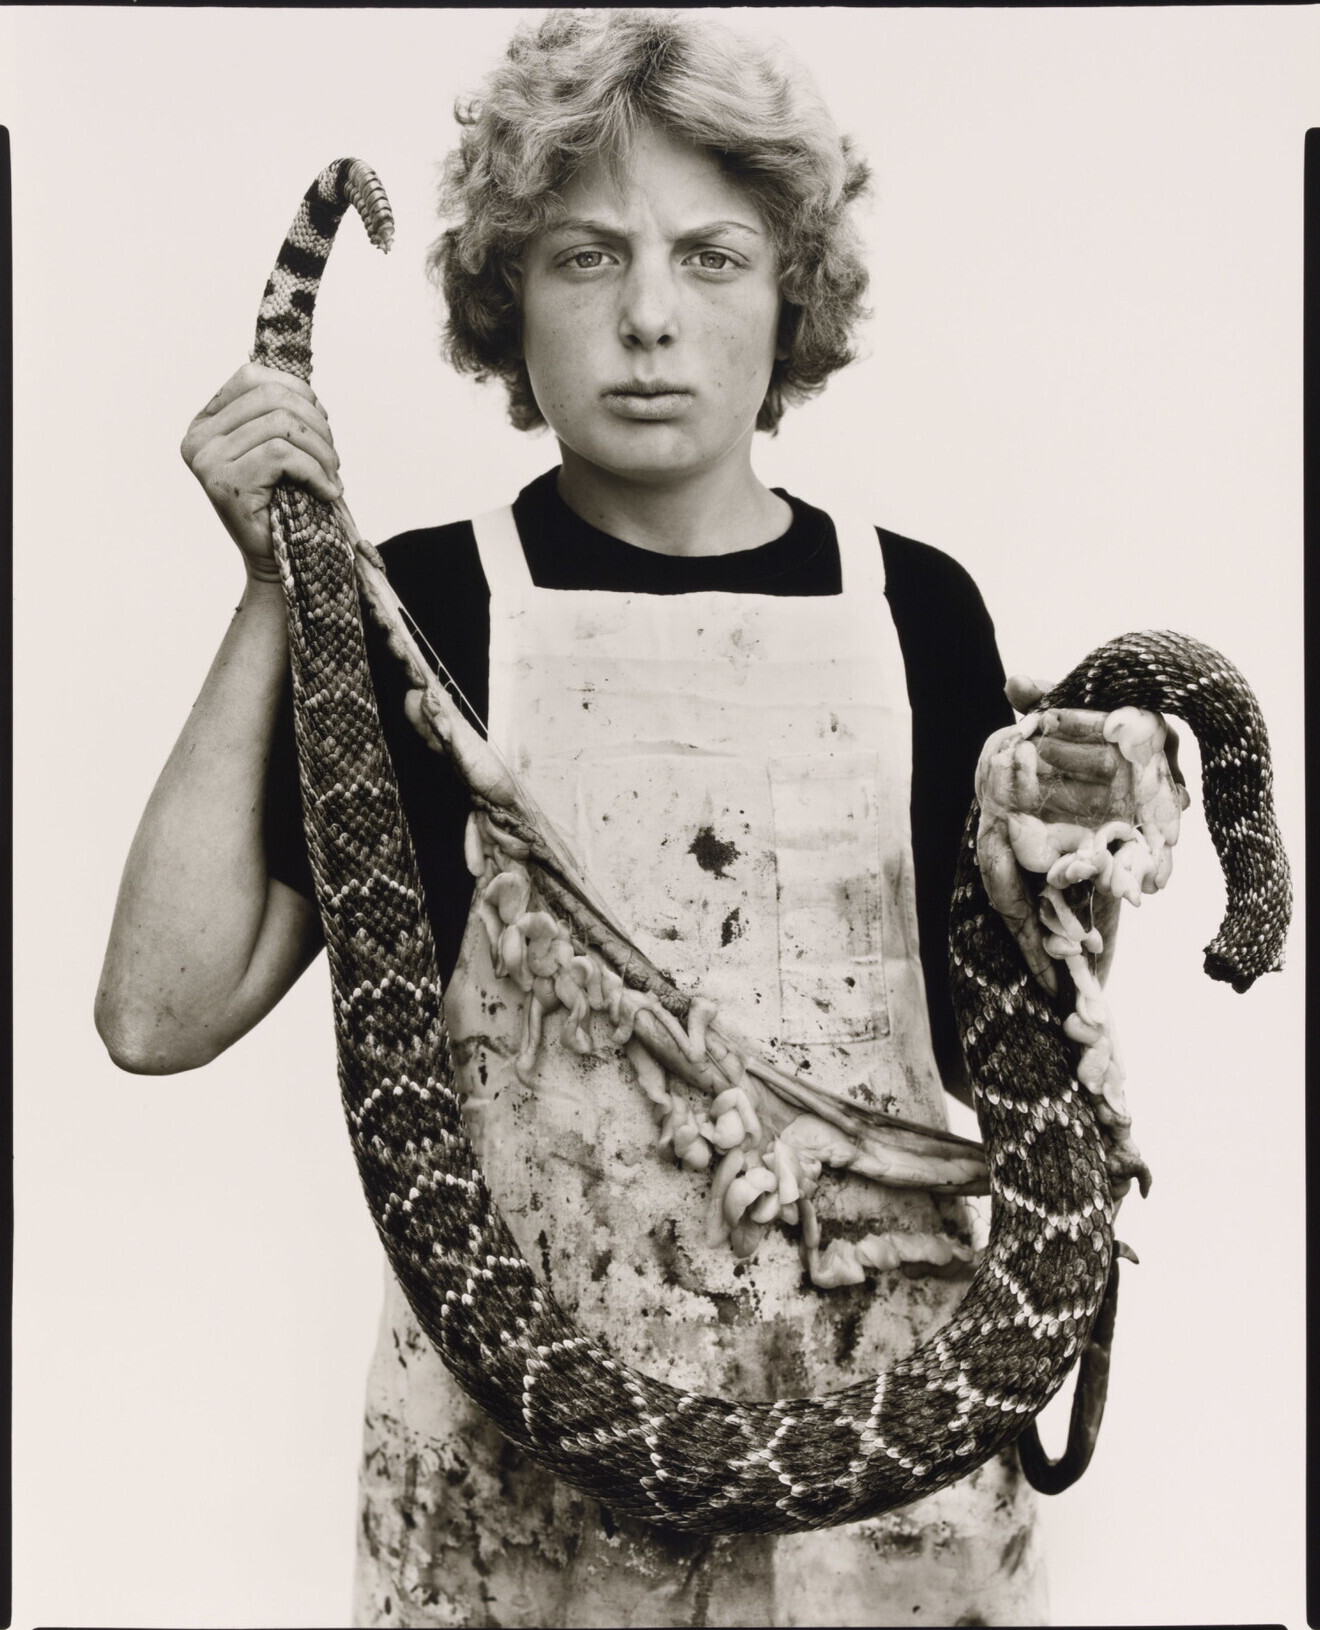 Бойд Фортин, тринадцатилетний Скиннер гремучей змеи, Свитуотер, Техас, 1979 г. Фотограф Ричард Аведон